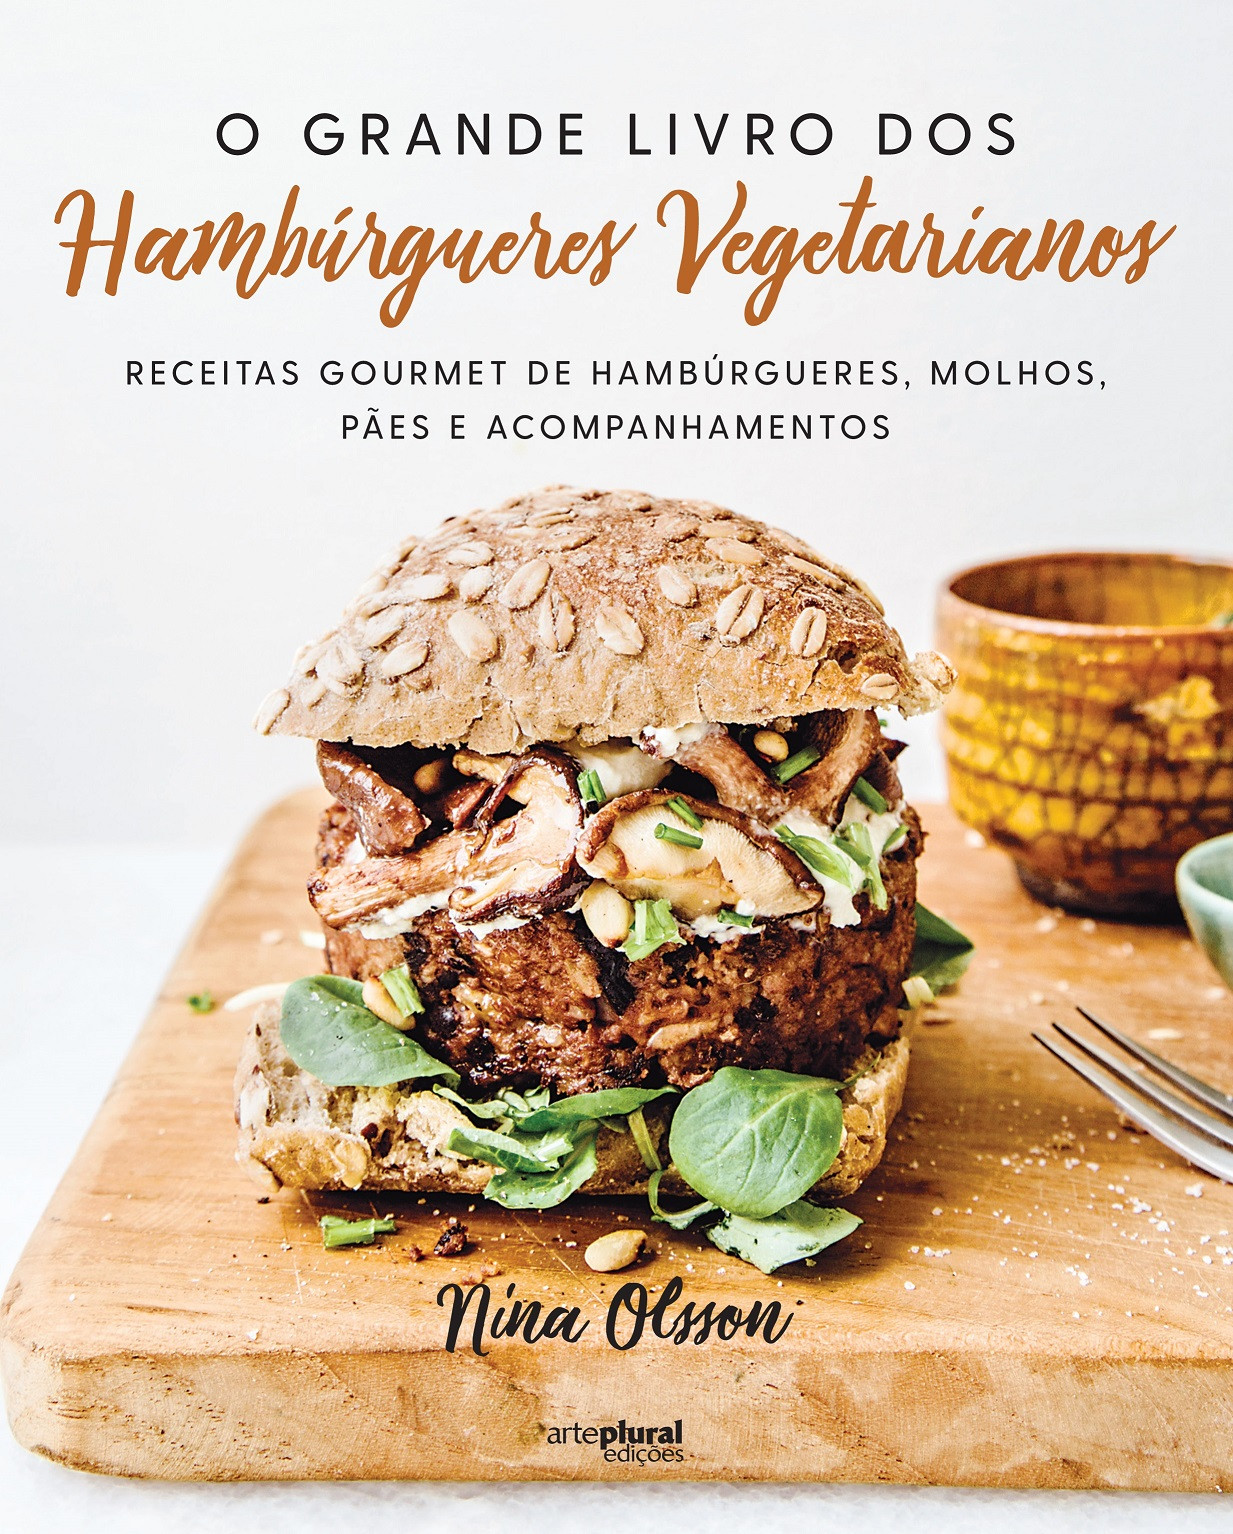 Capa_O Grande Livro dos Hamburgueres Vegetarianos.jpg